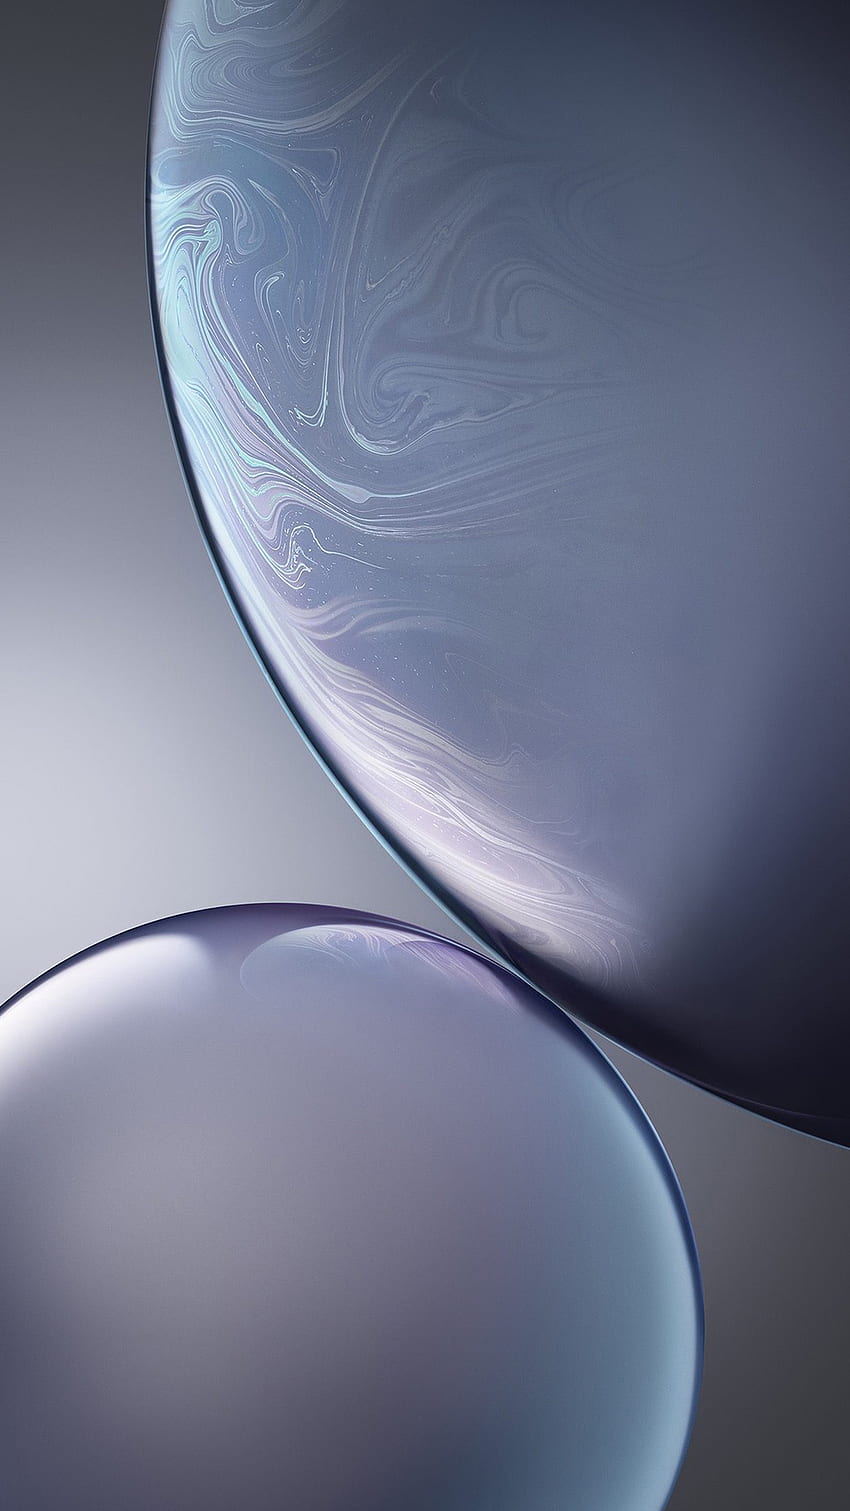 Burbuja de arte oficial Apple Iphone Xs Max gris, iPhone 8 Plus predeterminado fondo de pantalla del teléfono